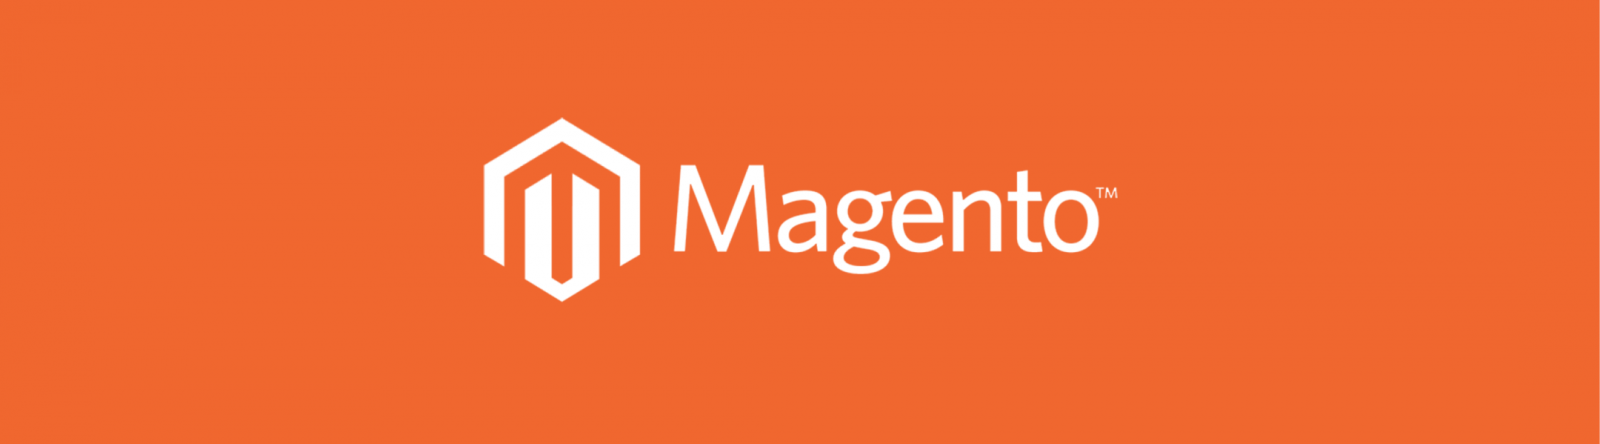 Magento online store development